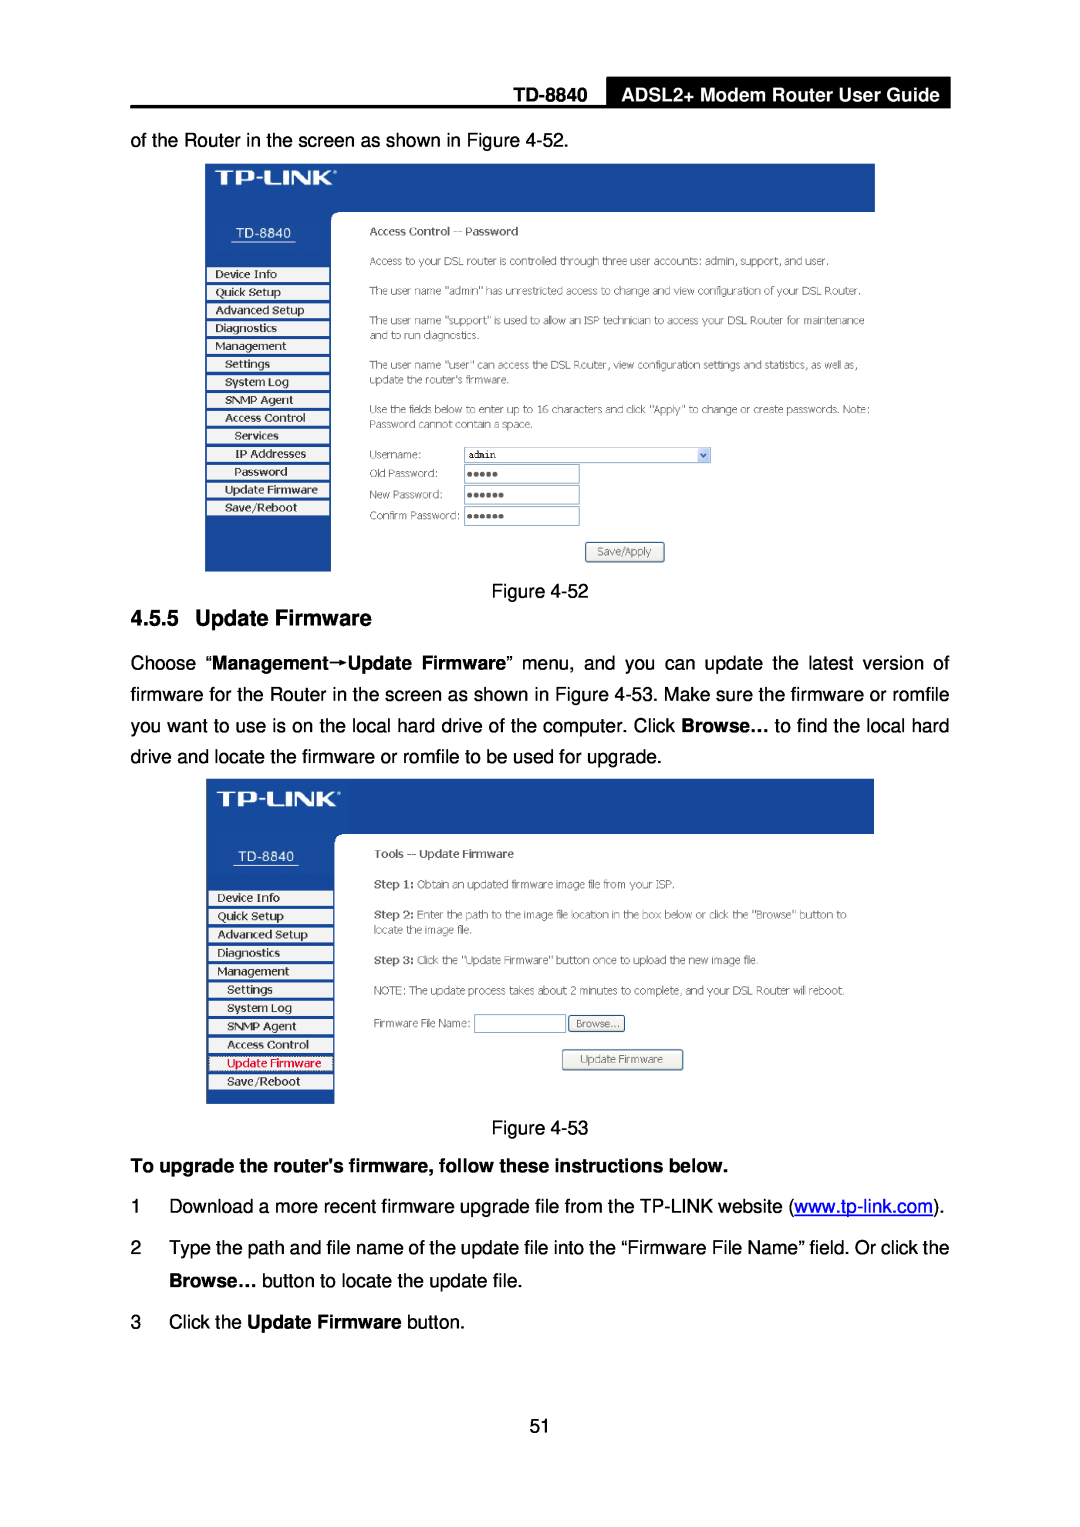 TP-Link TD-8840 manual Update Firmware, ADSL2+ Modem Router User Guide 